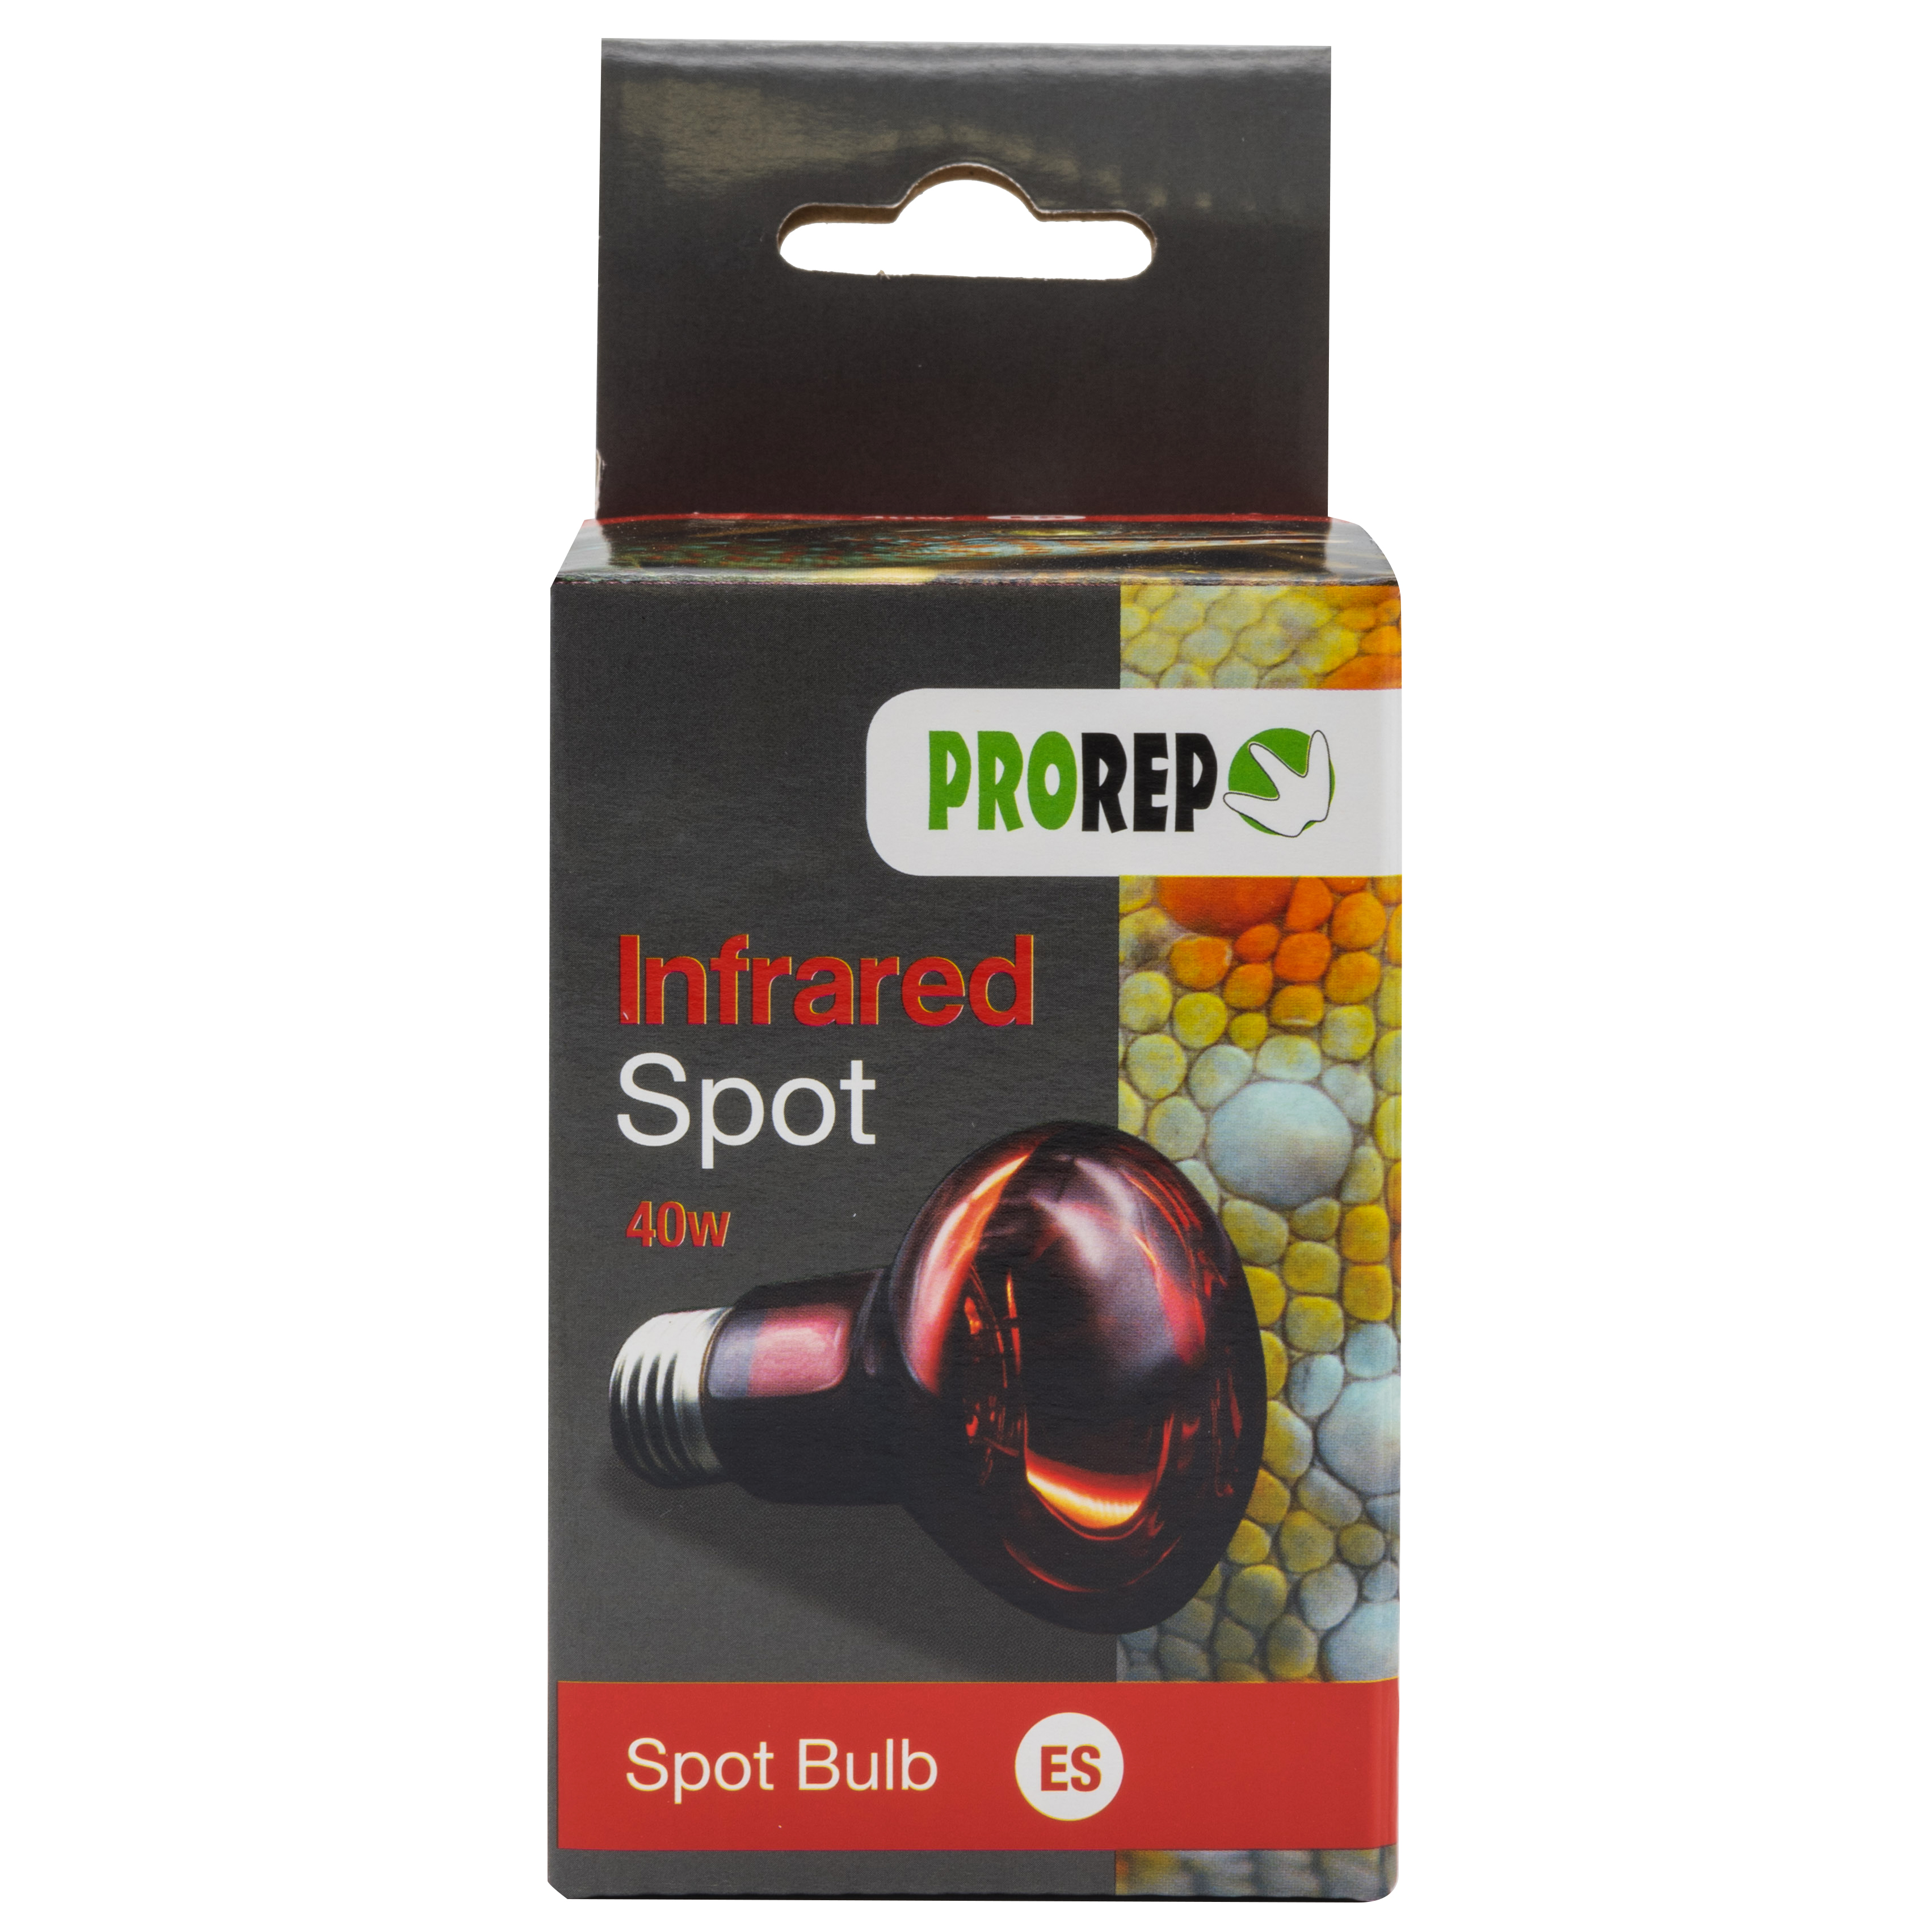 ProRep Infrared Spot Lamp 40w ES